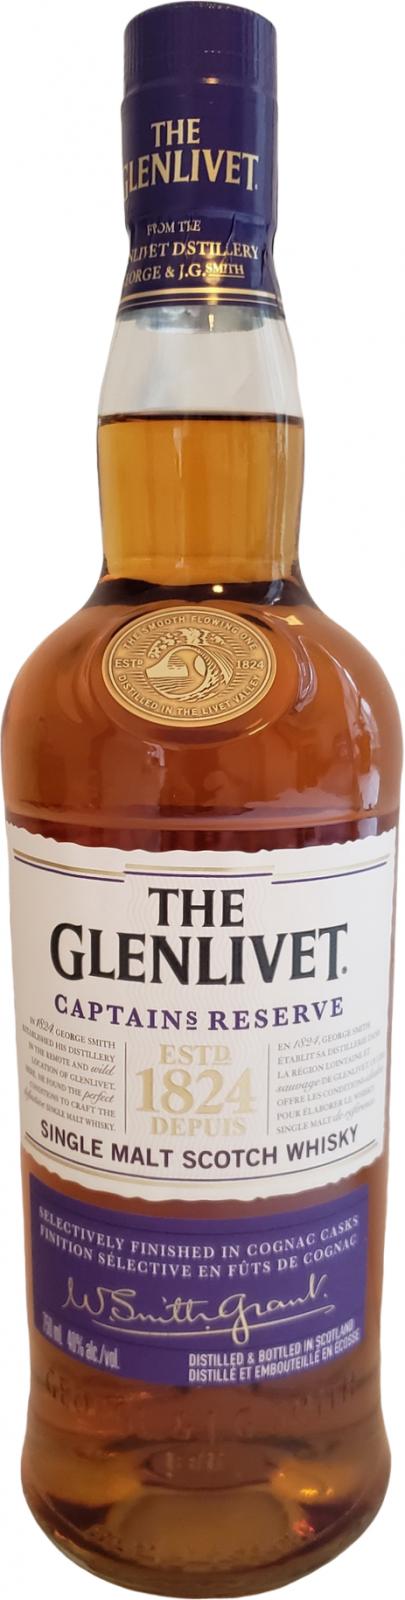 Glenlivet Captain's Reserve Cognac Casks Finish 40% 750ml